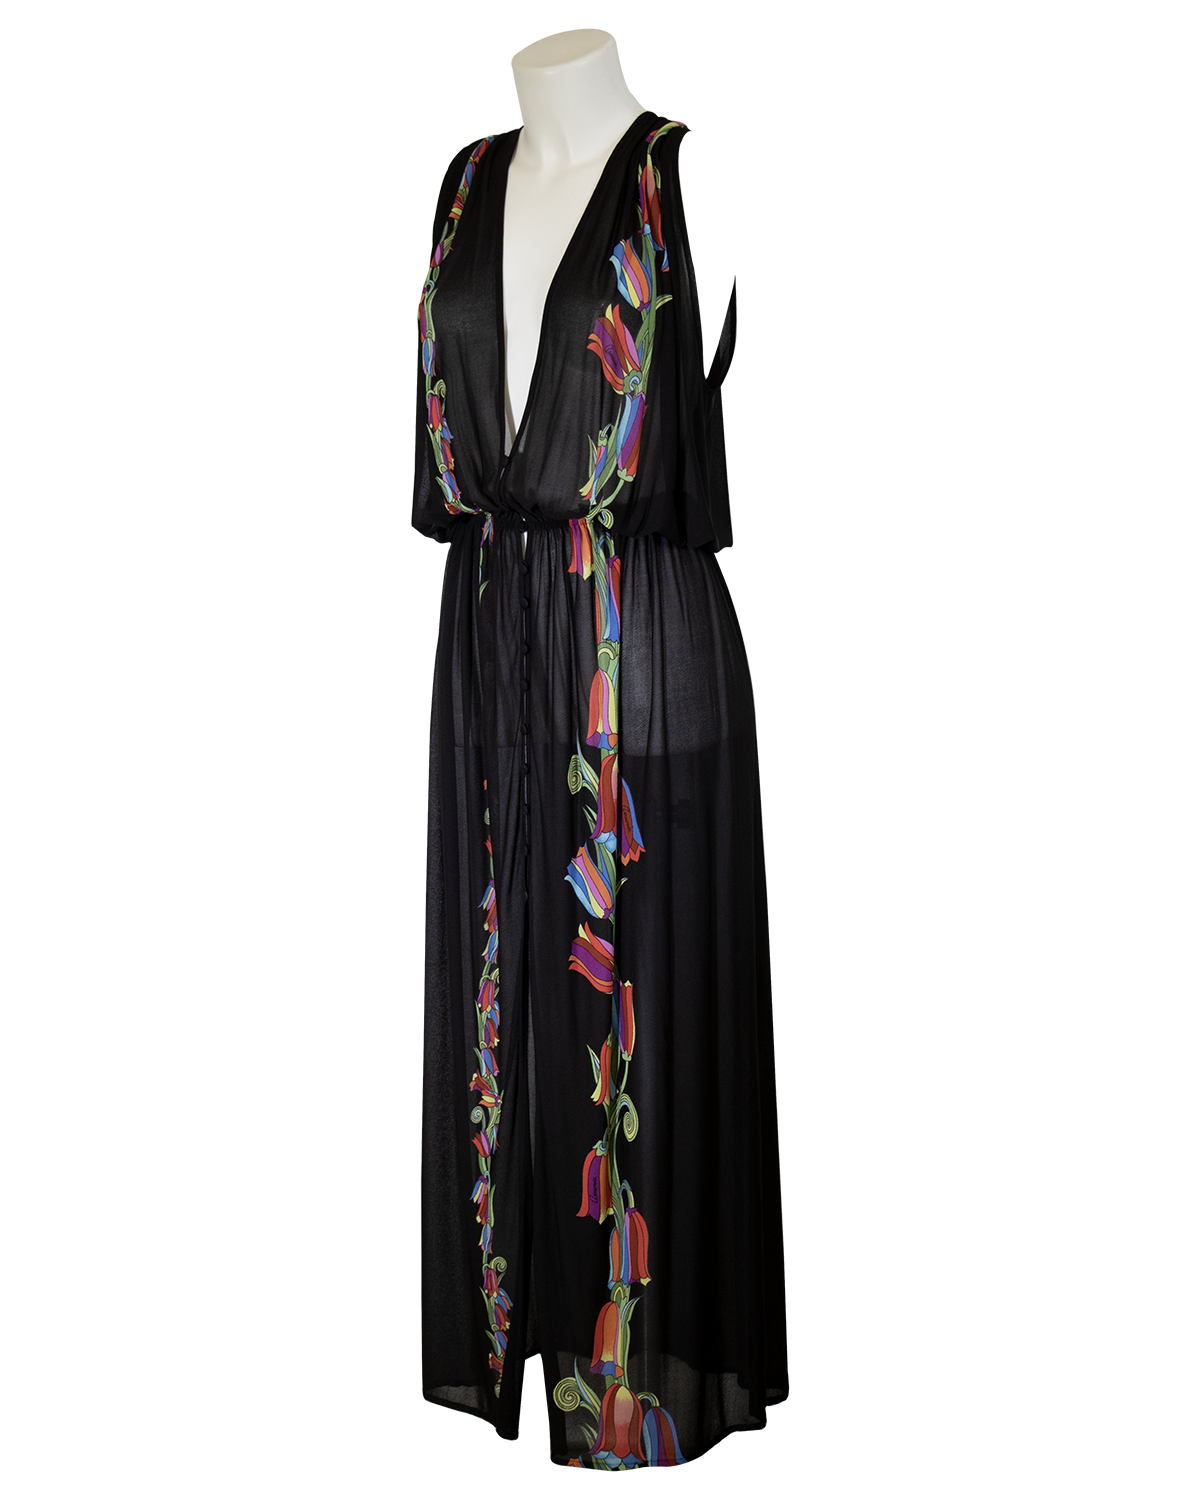 1970 - Black Sheer Dress with floral print